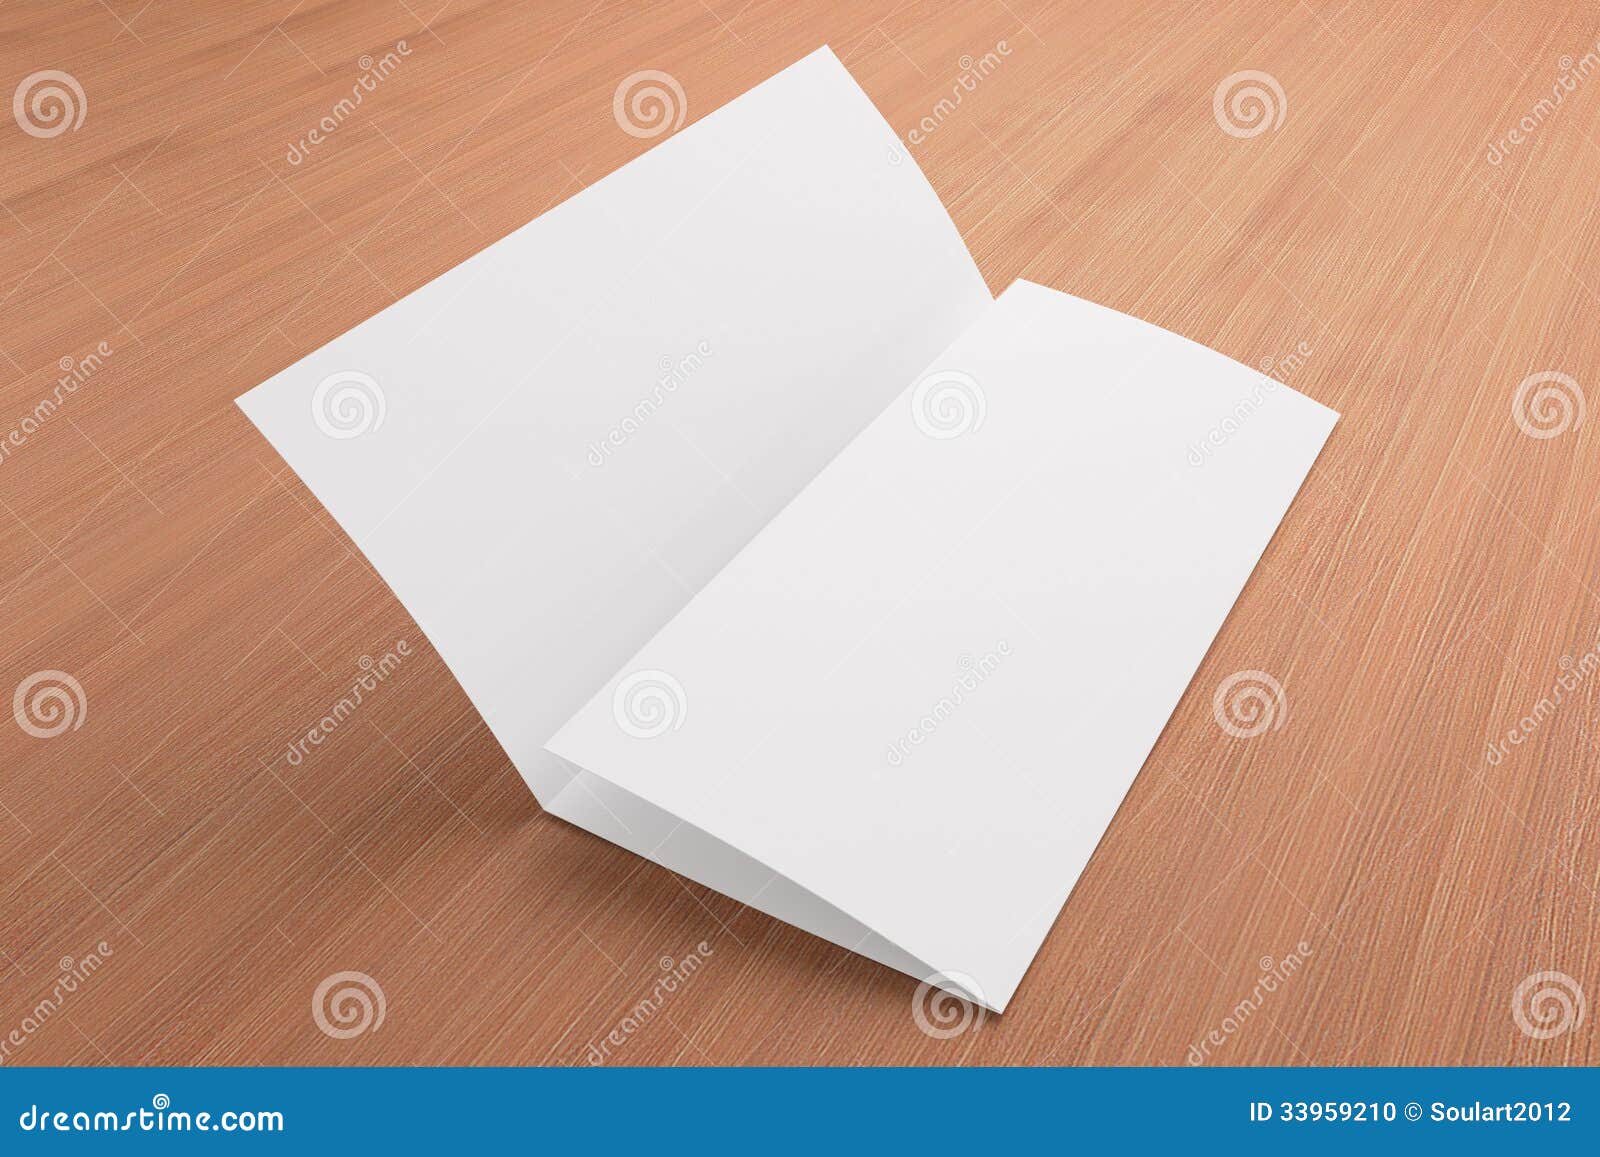 blank tri fold brochure on wooden background